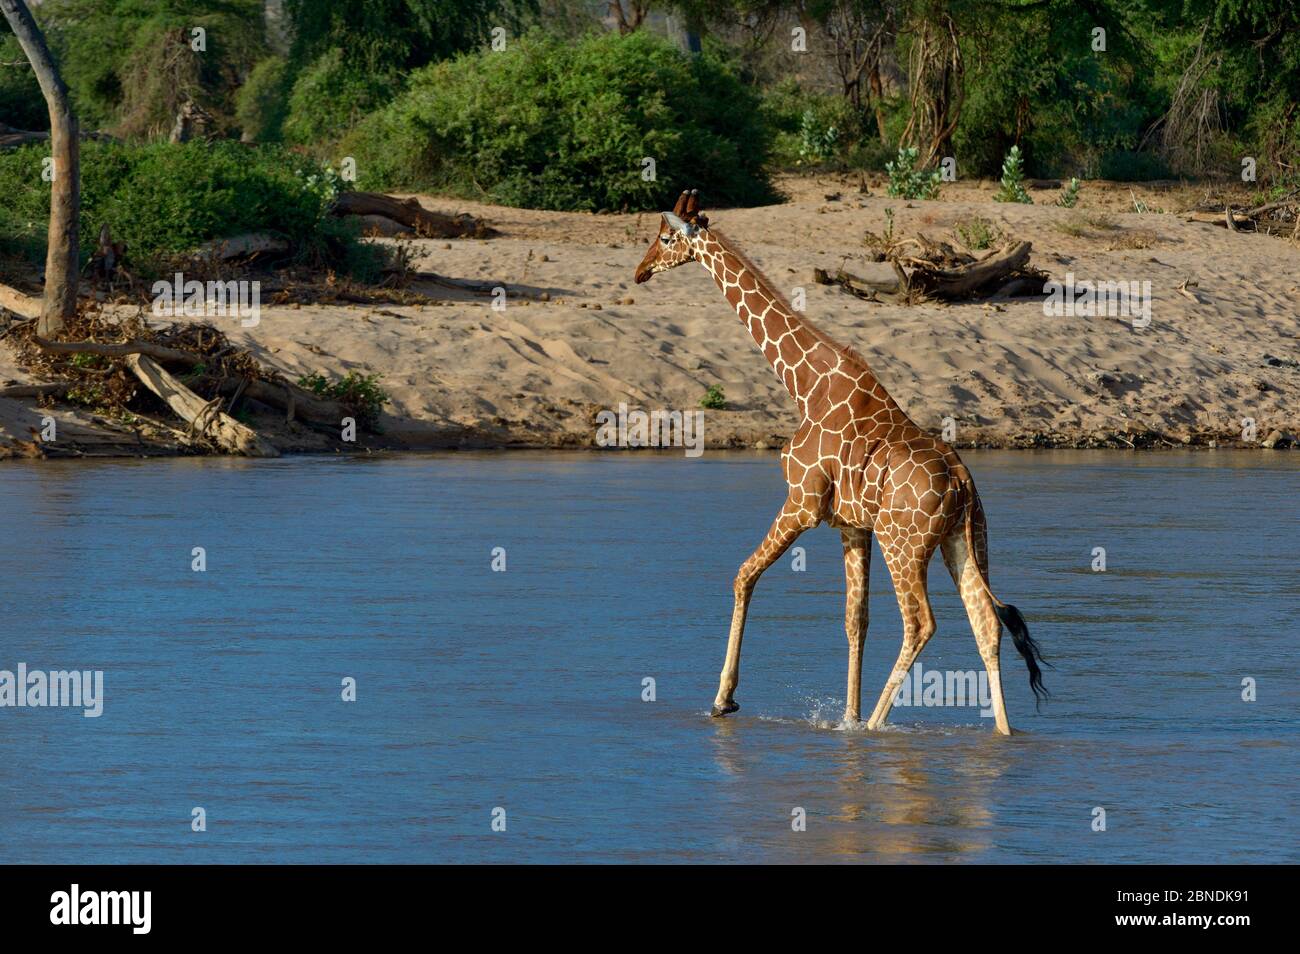 Jirafa reticulada (Giraffa camelopardis reticulata) cruzando el río, Parque Nacional Samburu, Kenia, octubre. Foto de stock